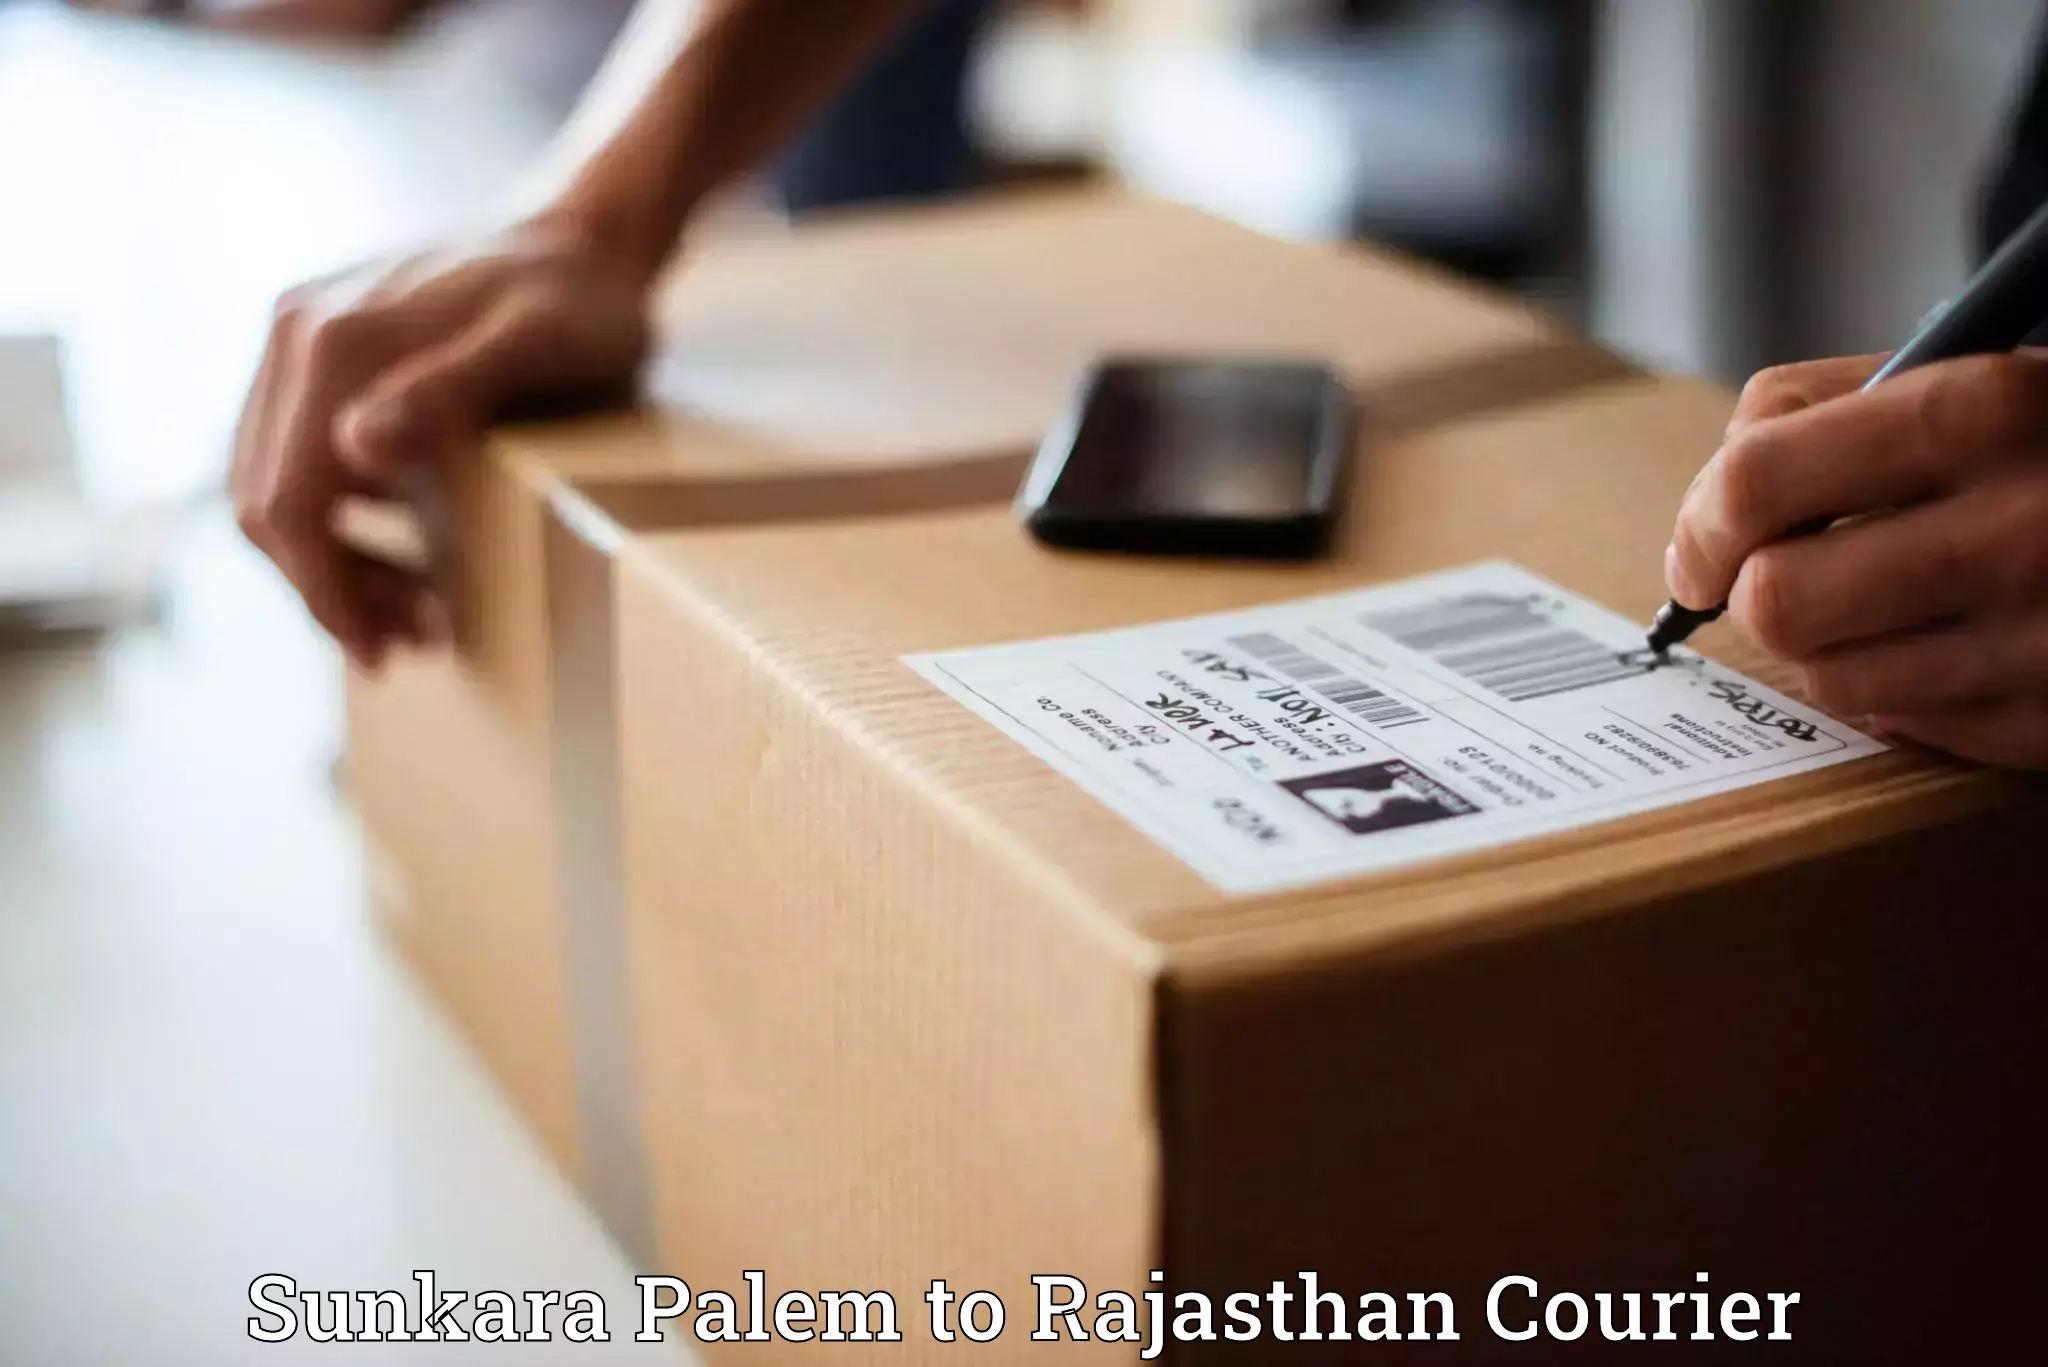 Express courier capabilities Sunkara Palem to Rajasthan